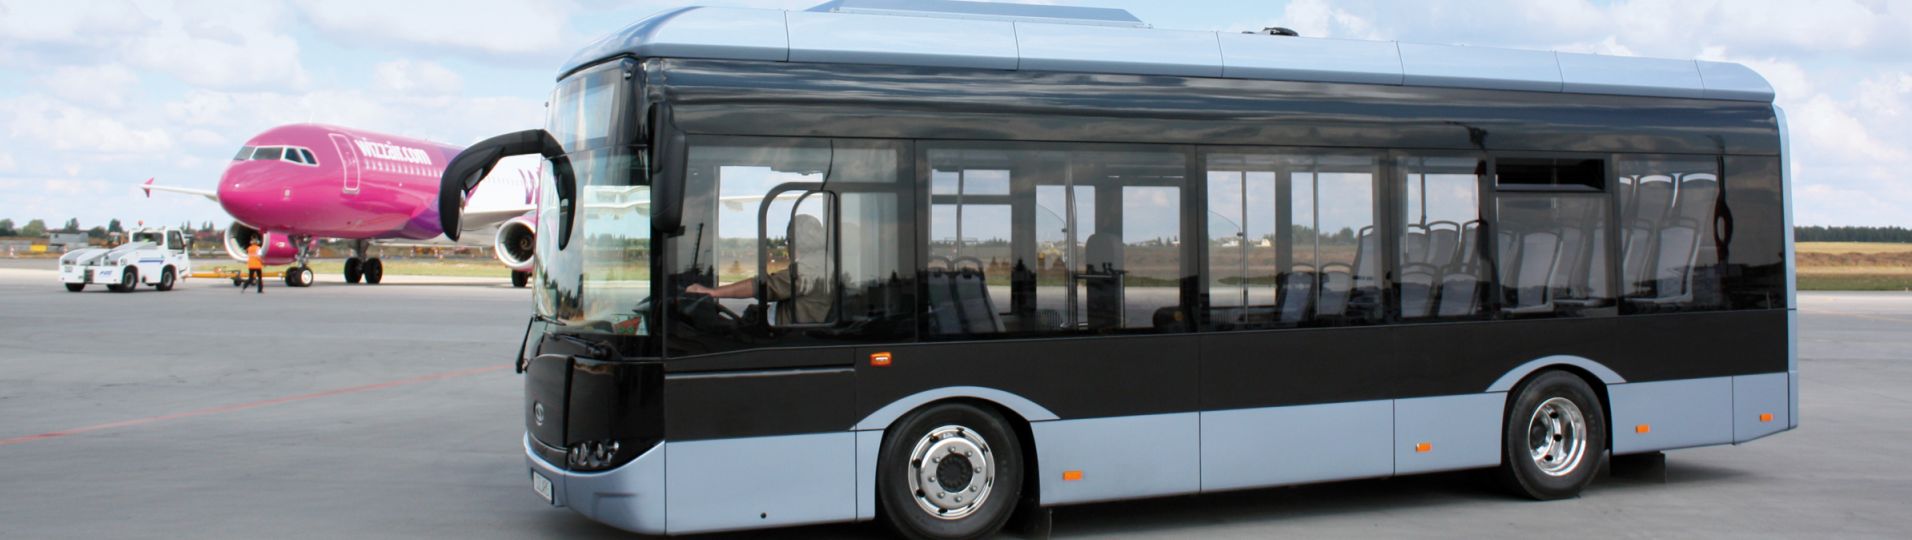 Solaris Electric Bus Wins Innovation Award